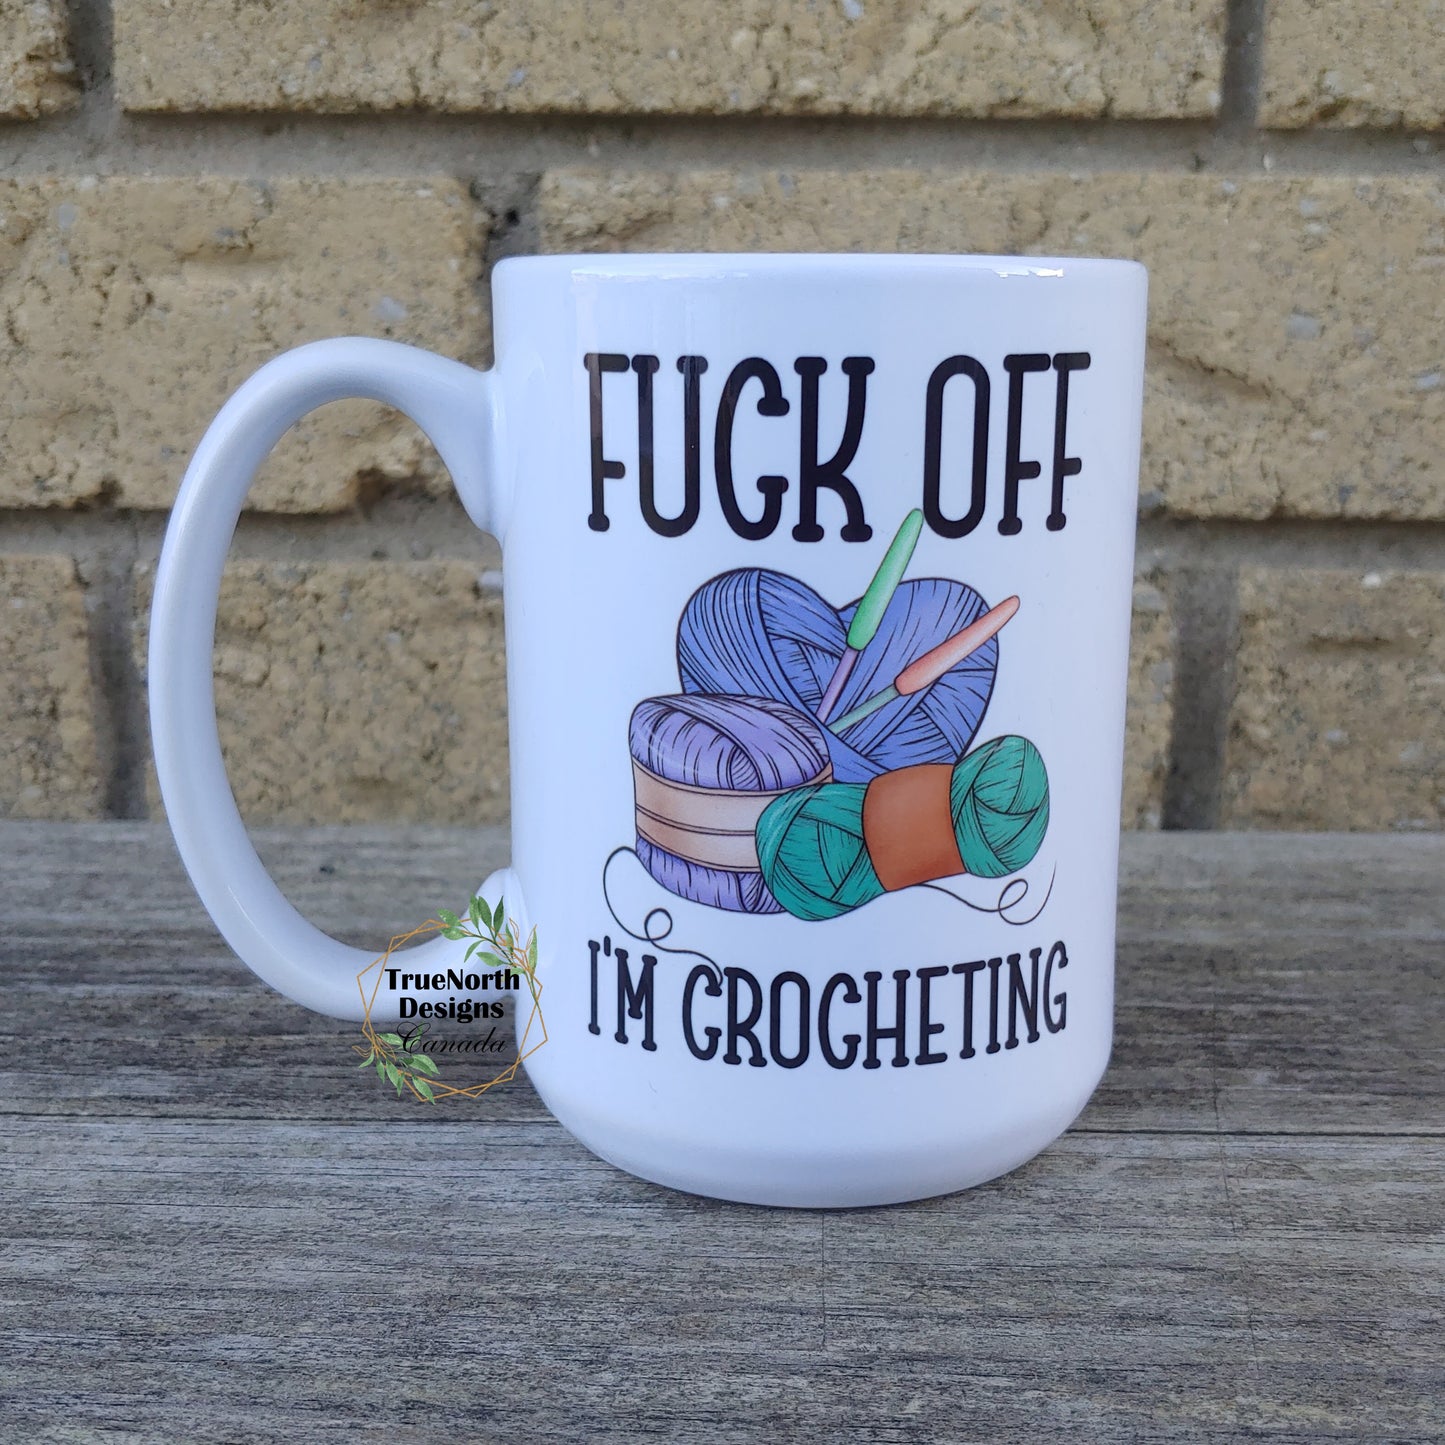 Fuck Off I'm Crocheting Mug